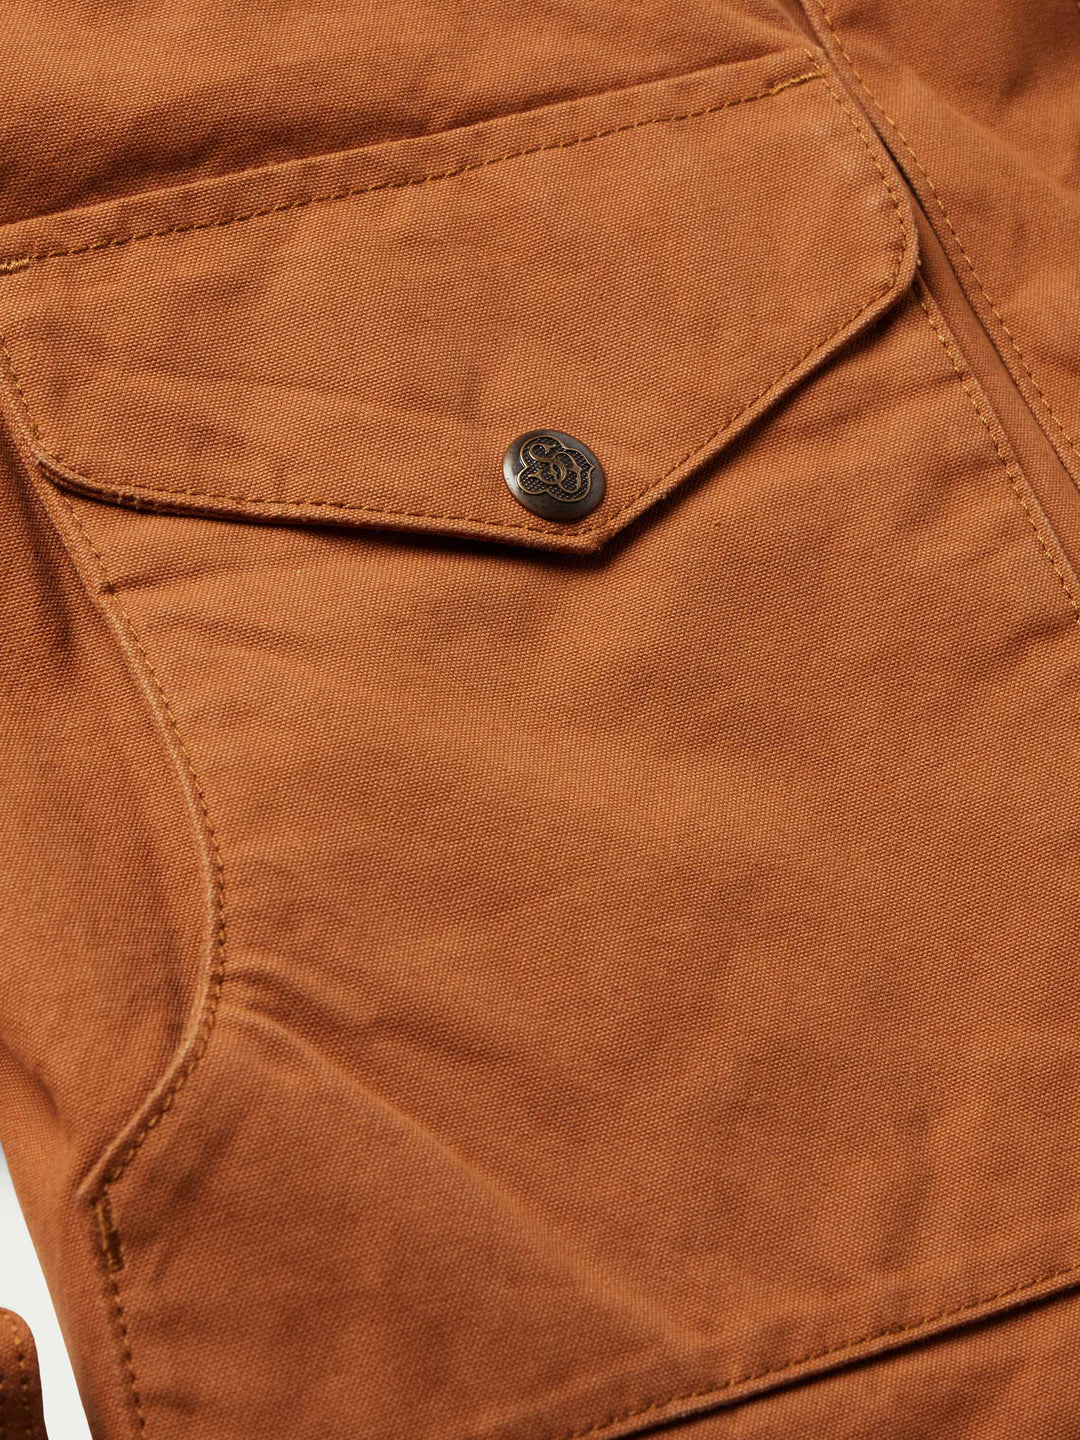 Zip Canvas Jacket with Fleece Blanket Lining - Schaefer Outfitter